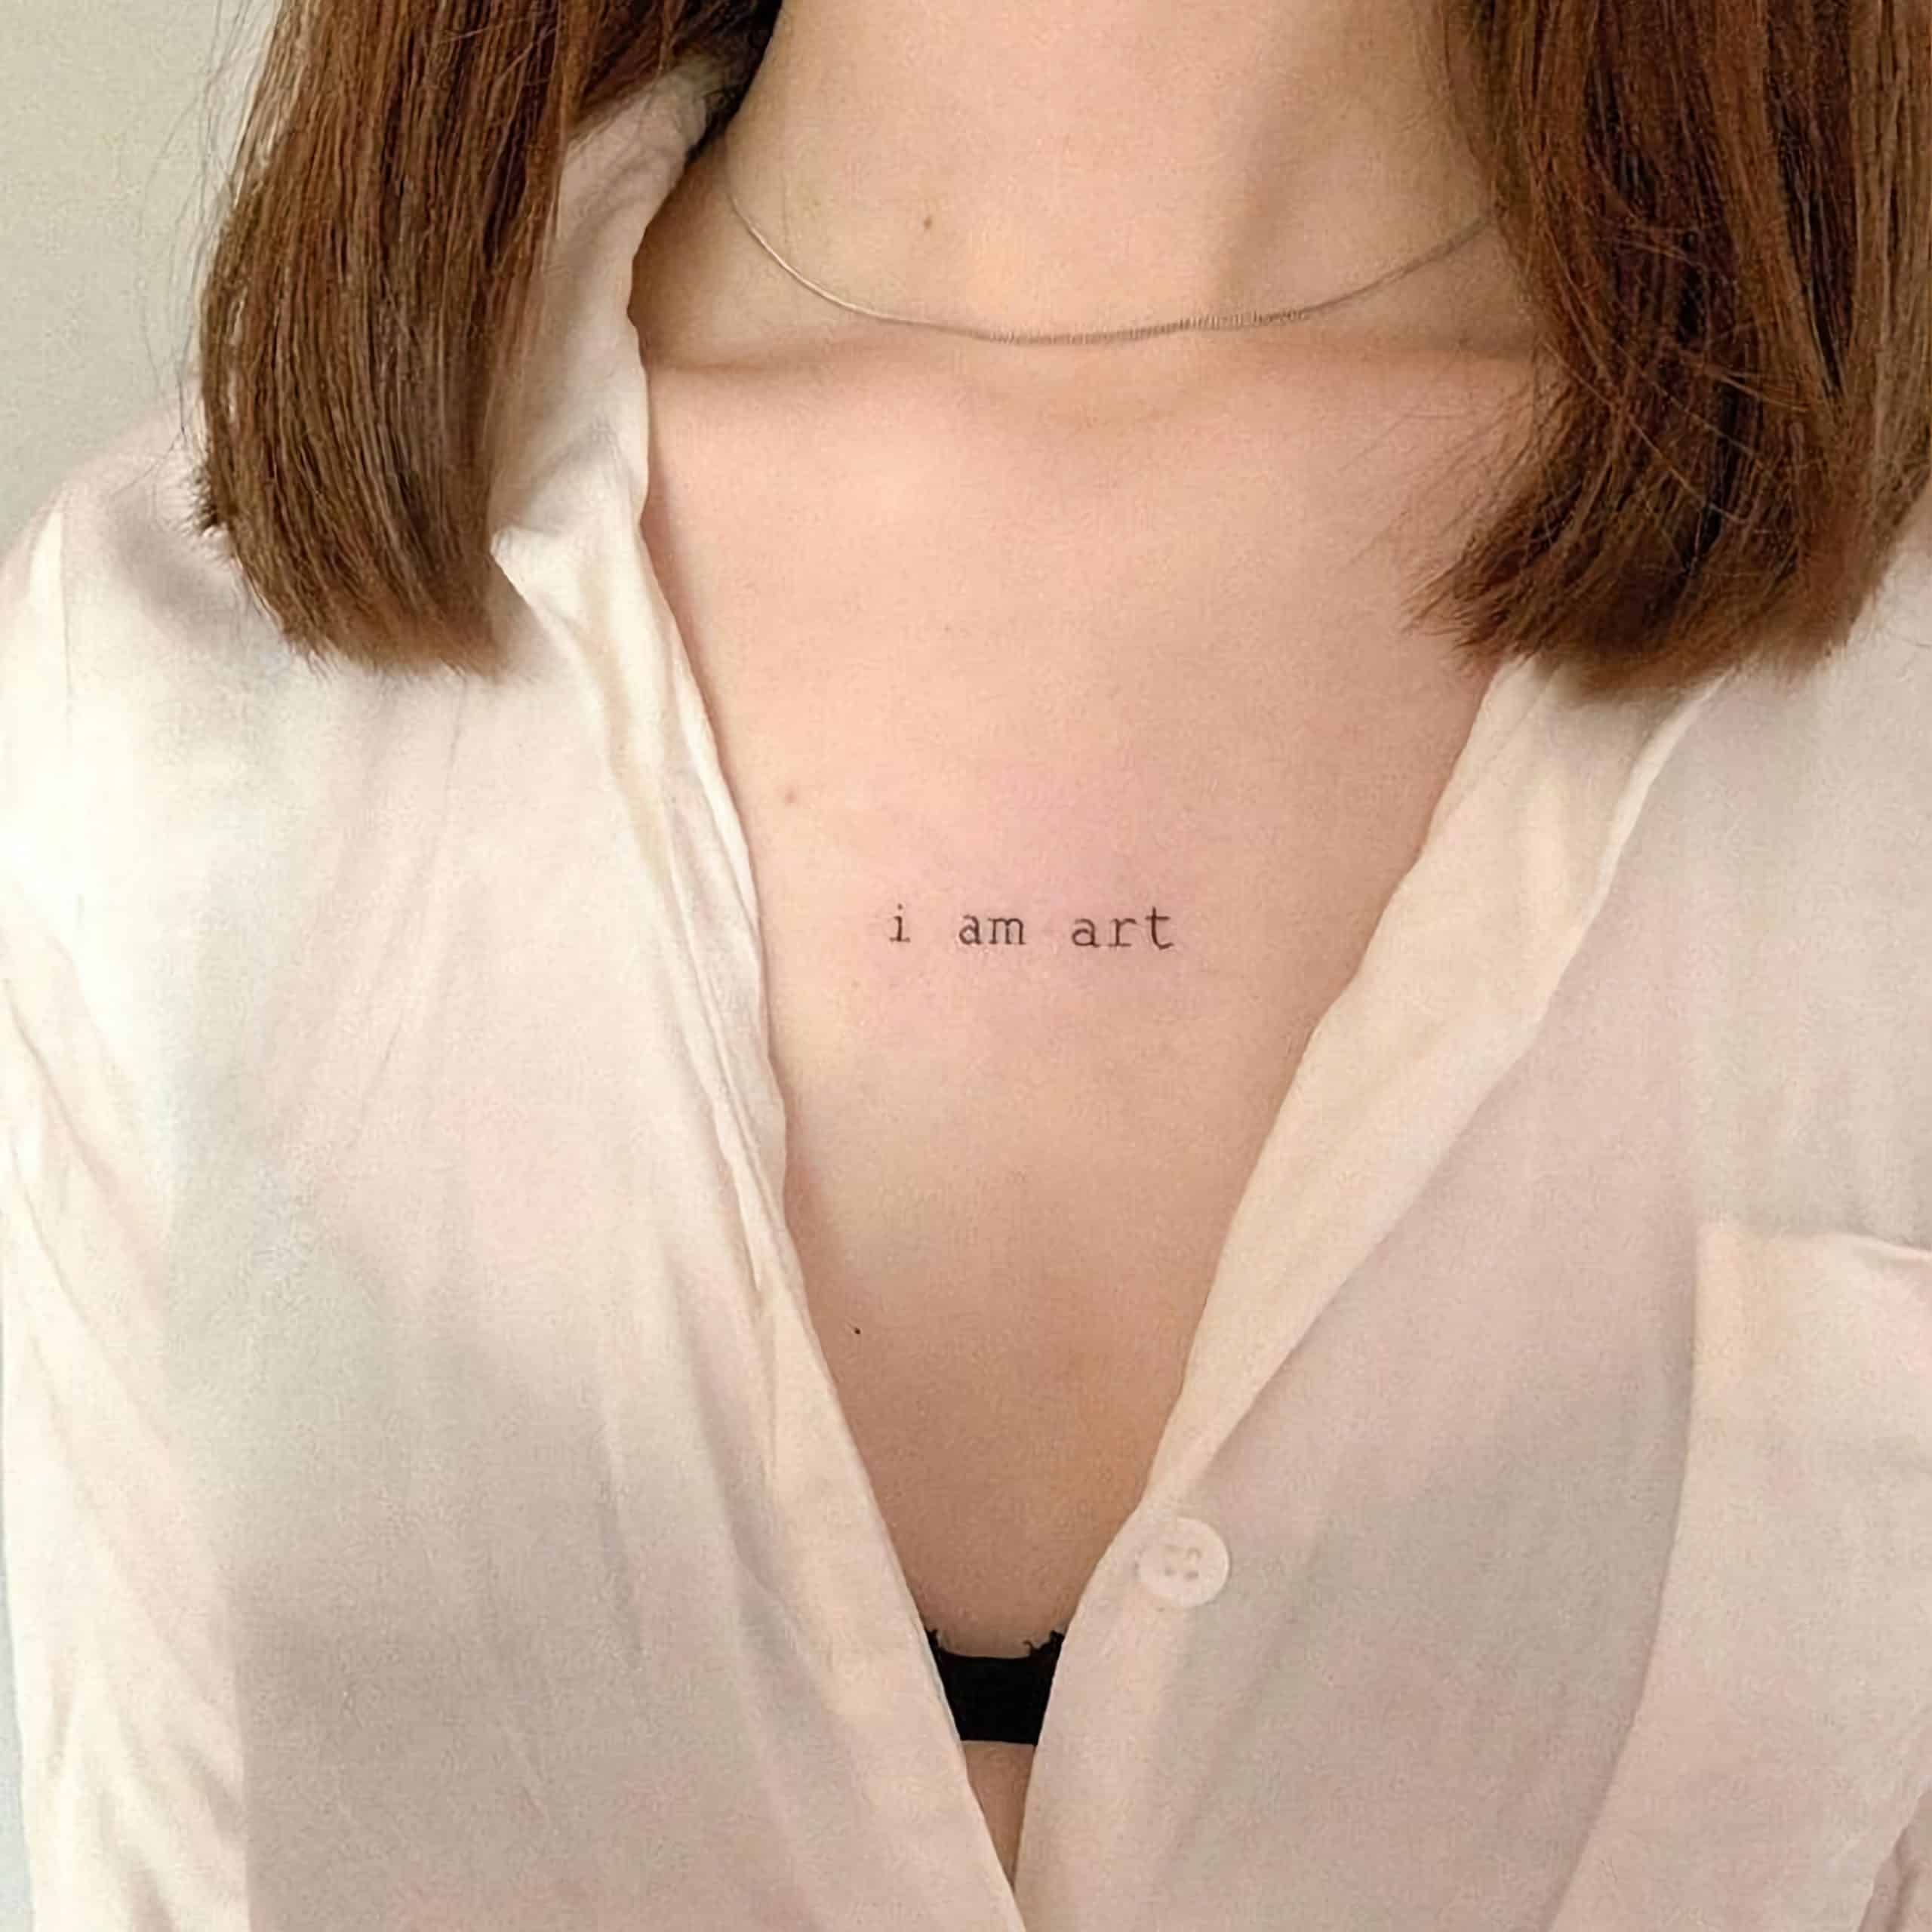 Frases para tatuarse - She is art